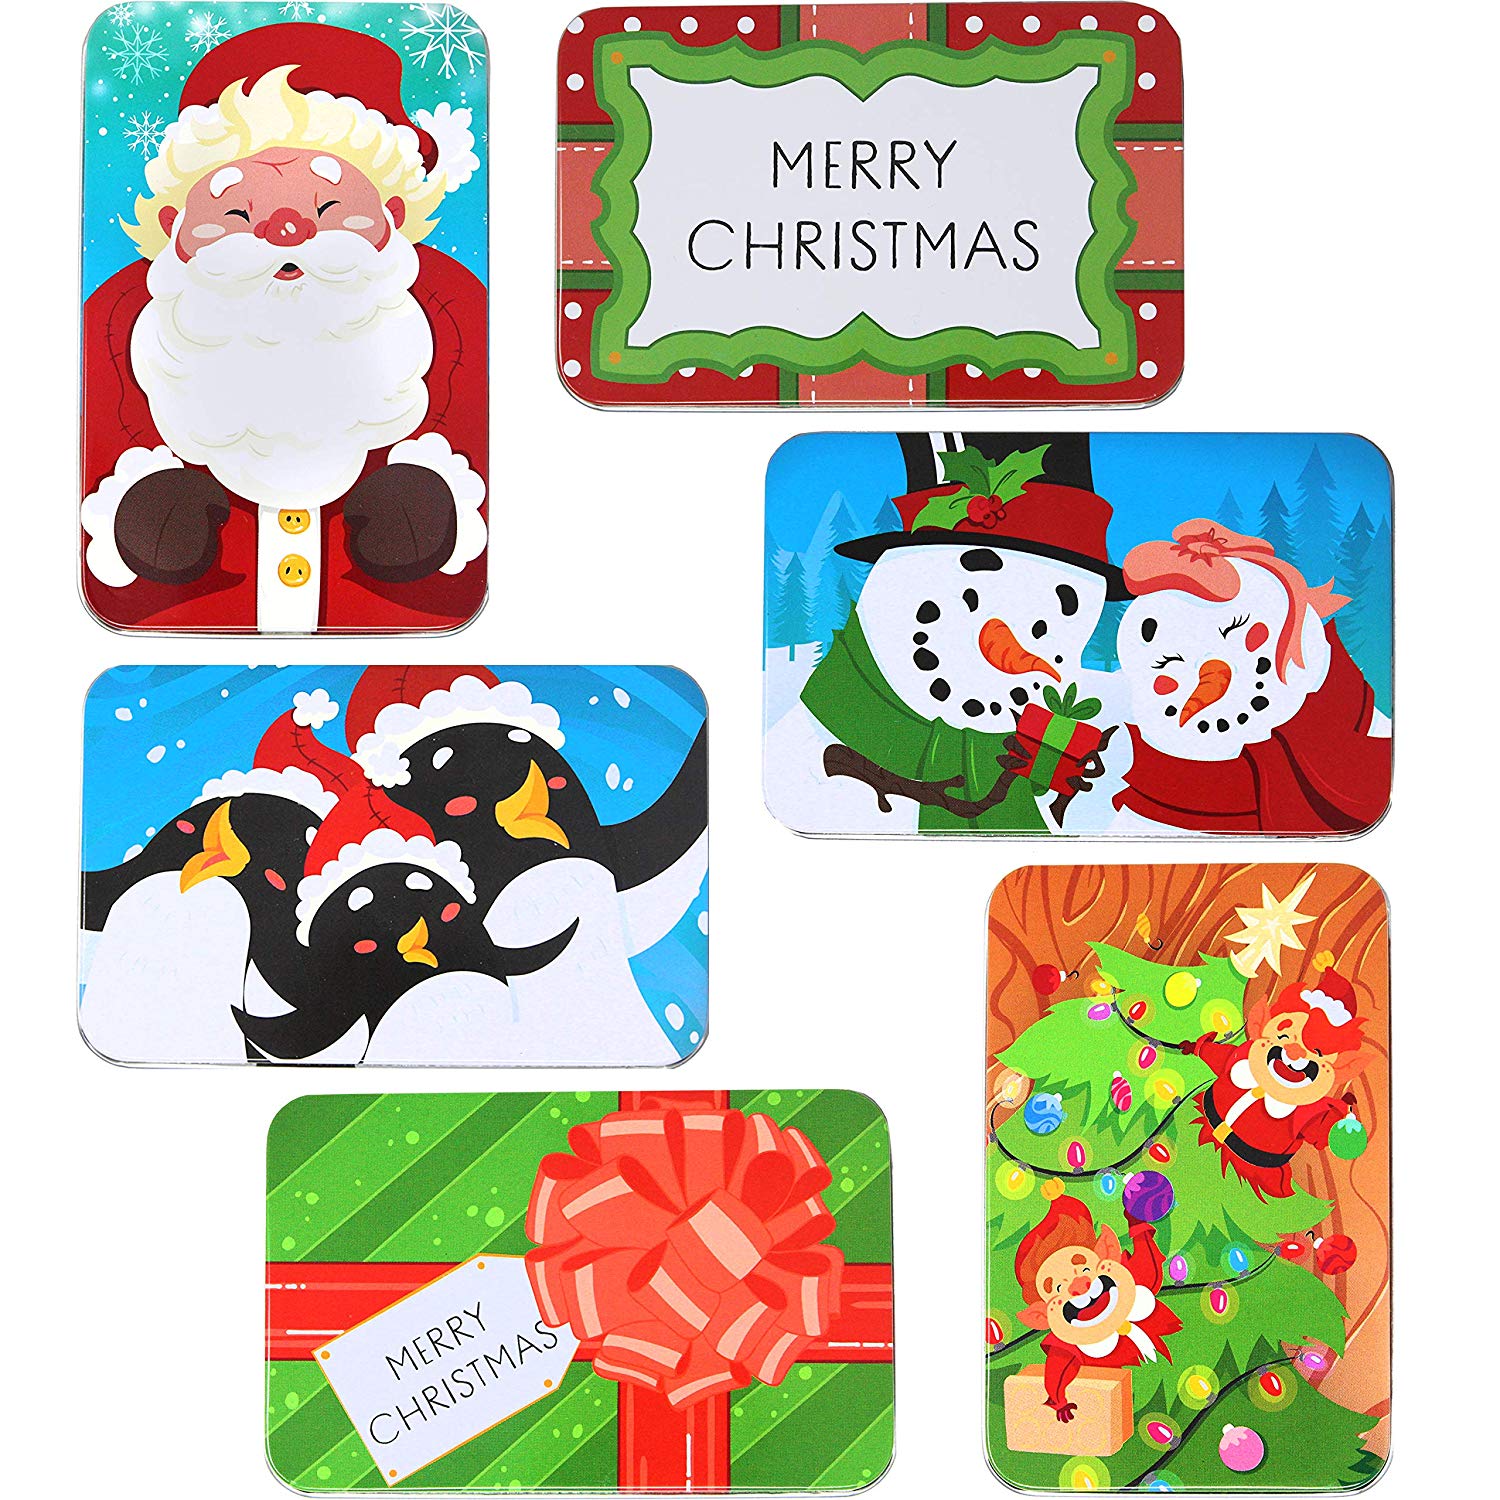  JOYIN 6 Christmas Gift Card Holder Tin Boxes 4.7” x 3.5” x 0.9”  Christmas Tins Holders for Christmas Holiday Décor, Xmas Party Favor Box :  NOT A BOOK: Health & Household